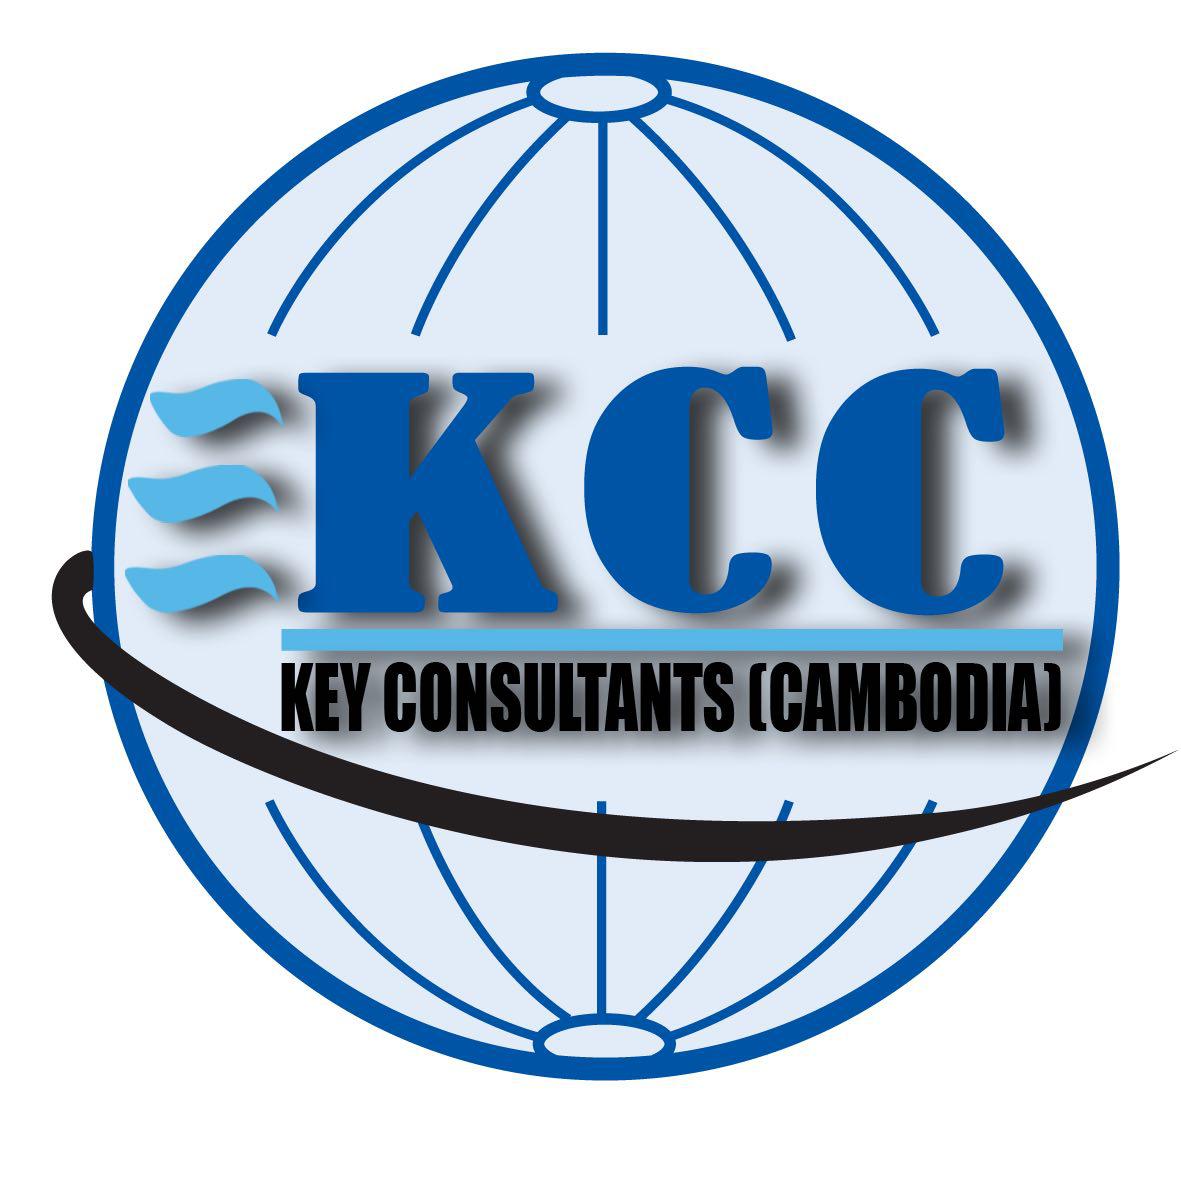 Key Consultants (Cambodia) LTD.